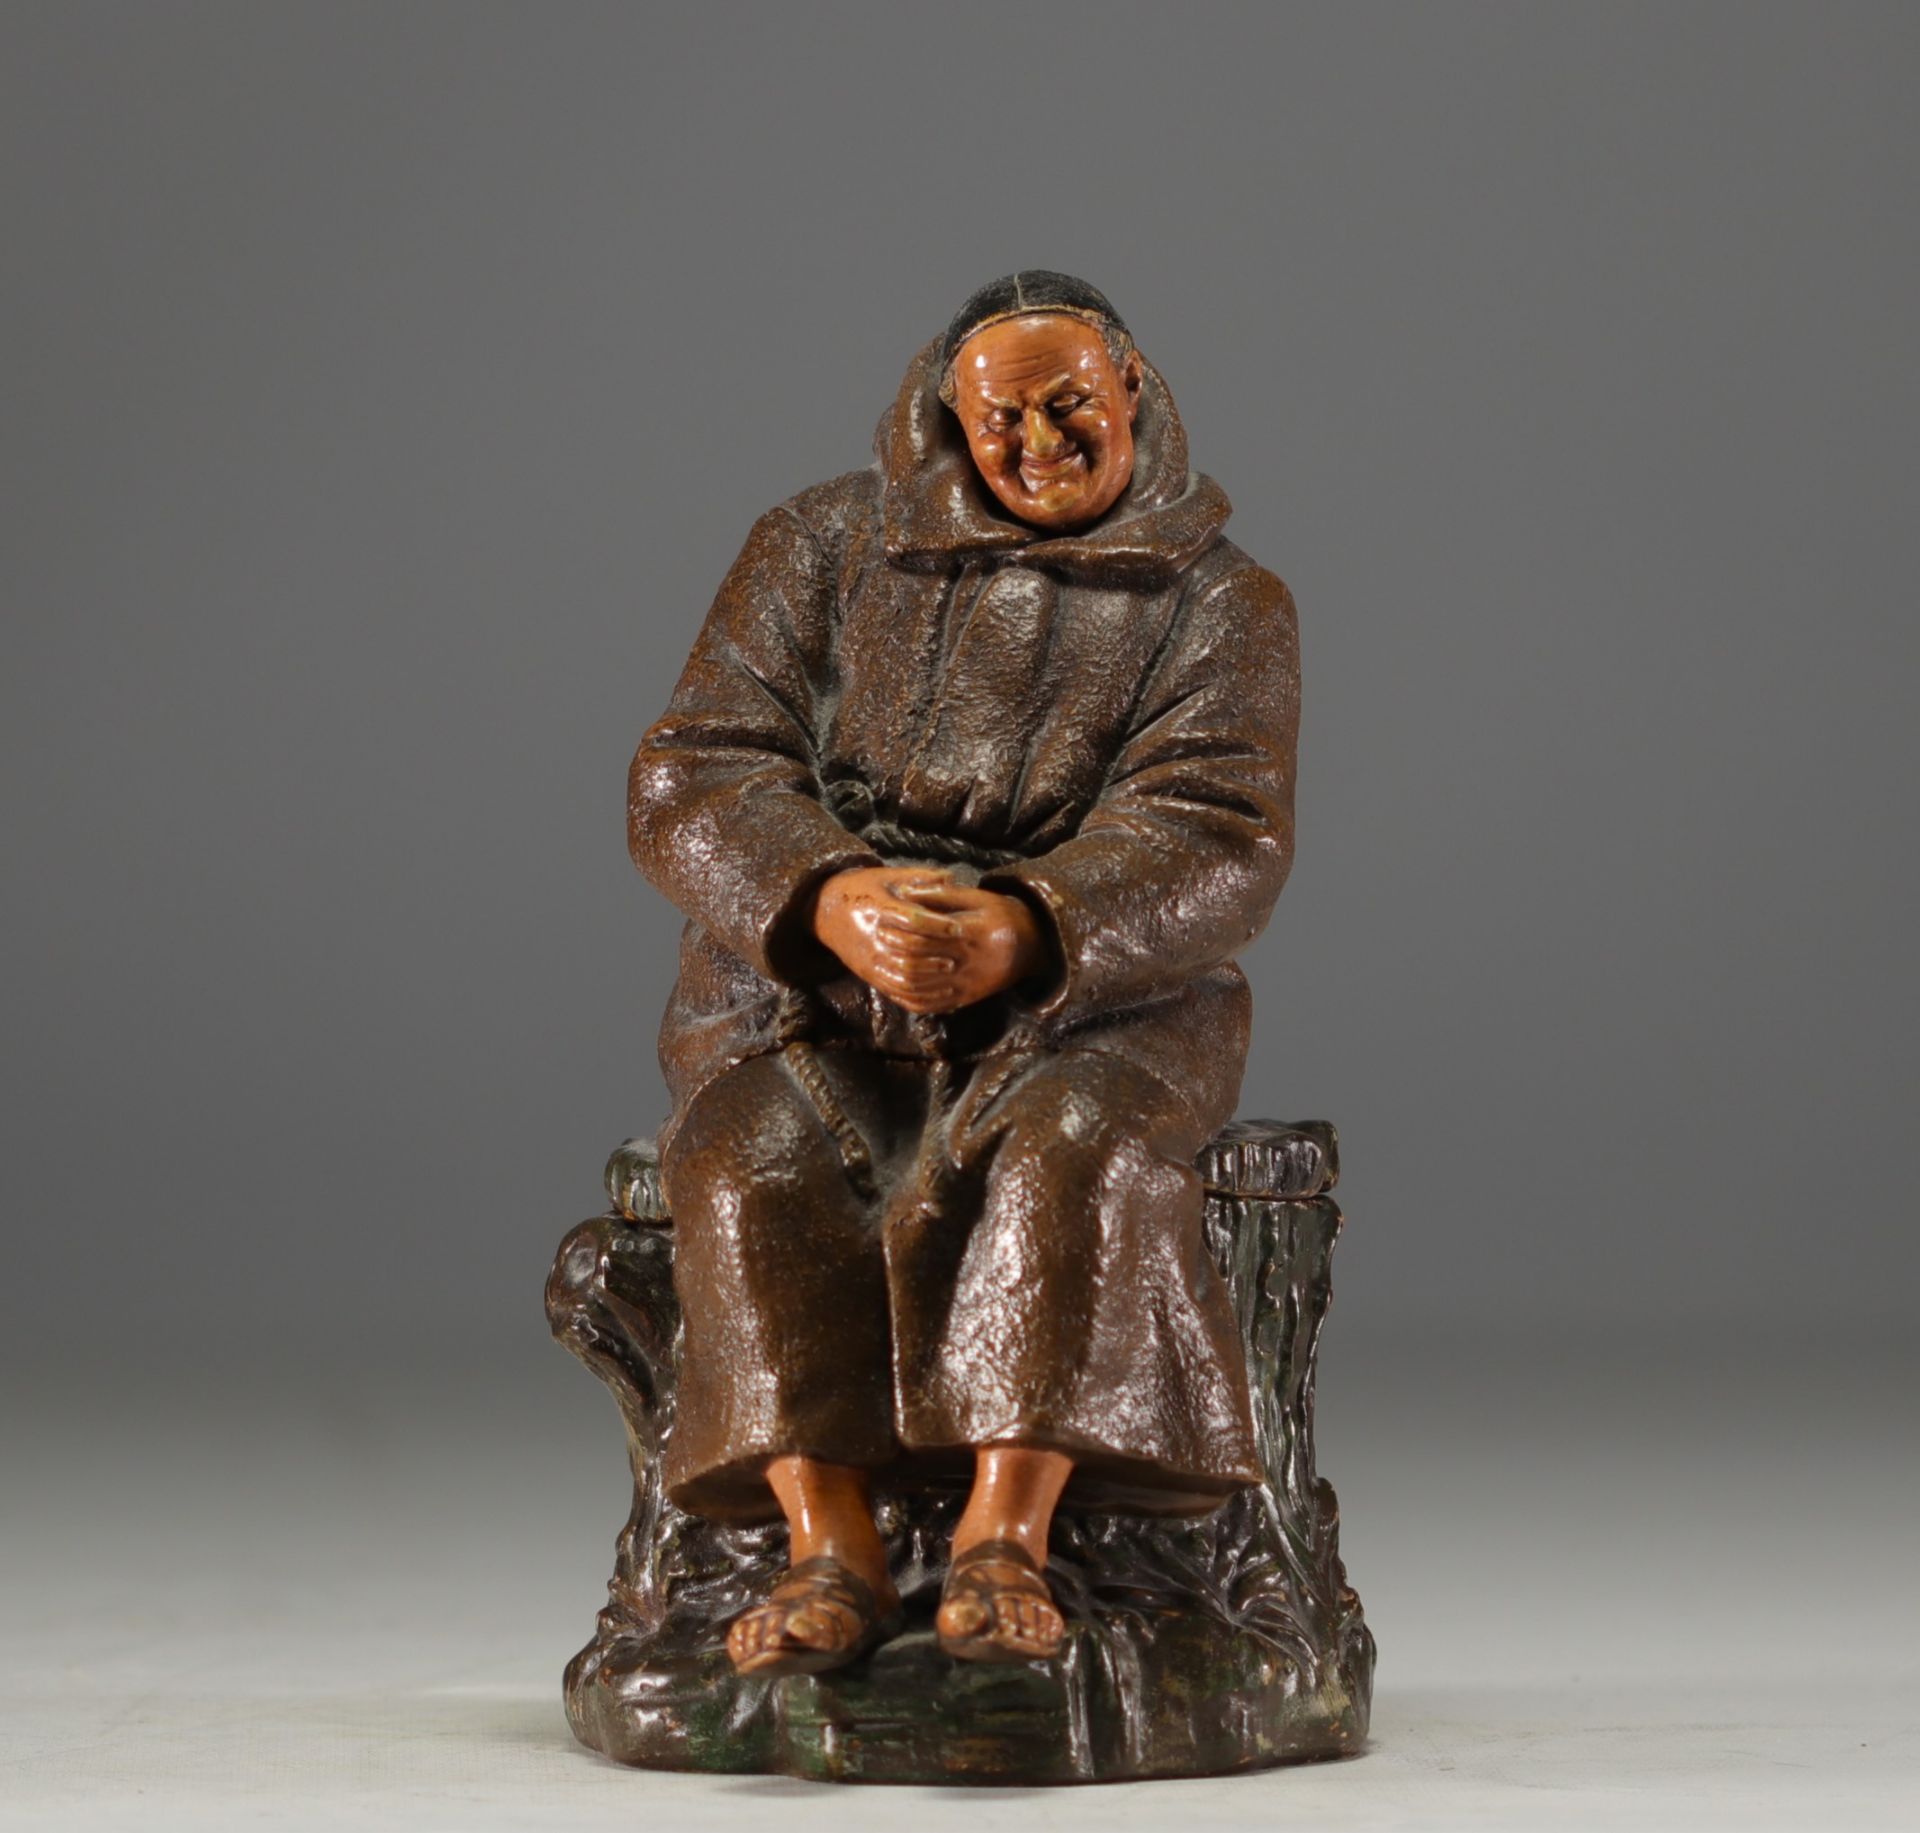 Bernhard BLOCH (1836-1909) "The monk at siesta" Polychrome terracotta tobacco pot. - Image 2 of 4